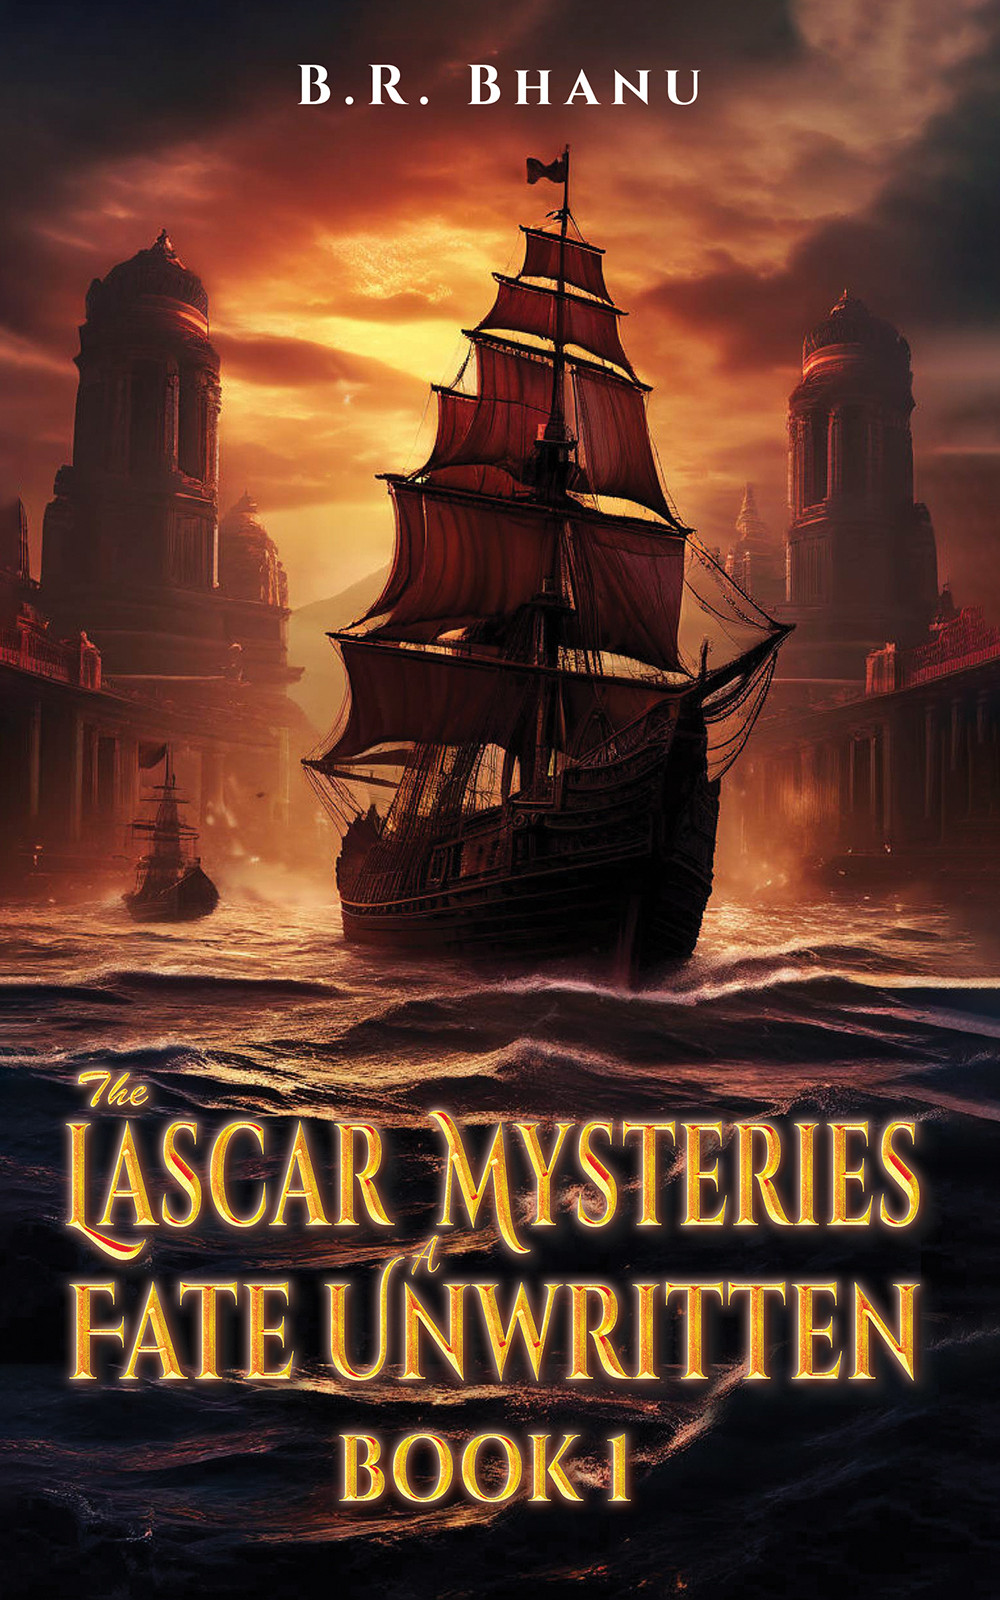 The Lascar Mysteries: A Fate Unwritten